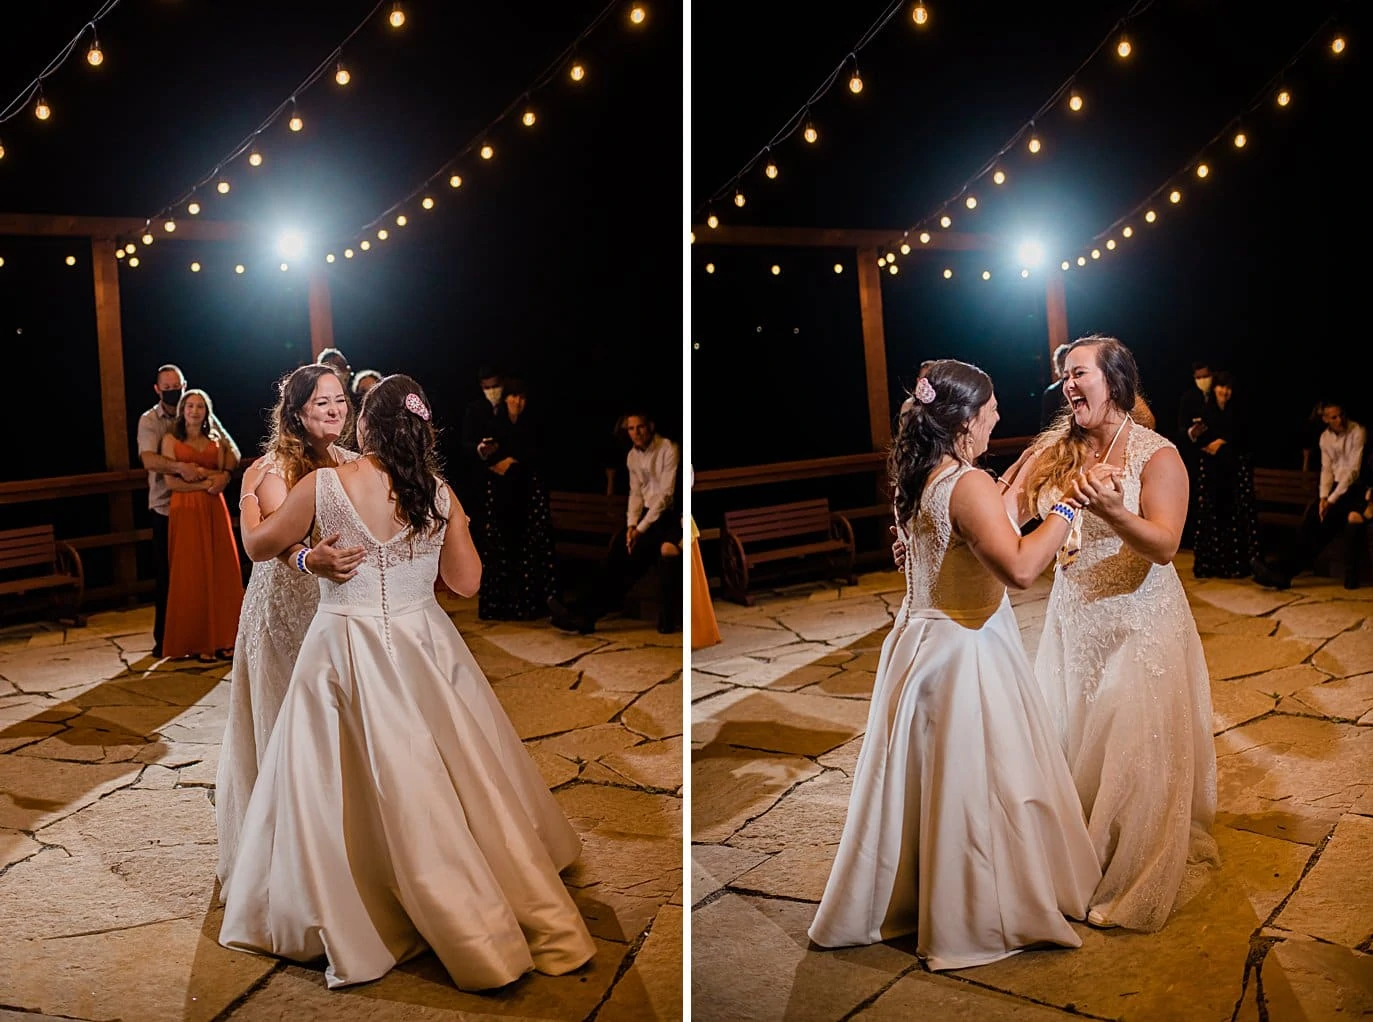 two brides share first dance on patio under market lights at Deer Creek Valley Ranch same-sex wedding by Denver LGBT wedding photographer Jennie Crate